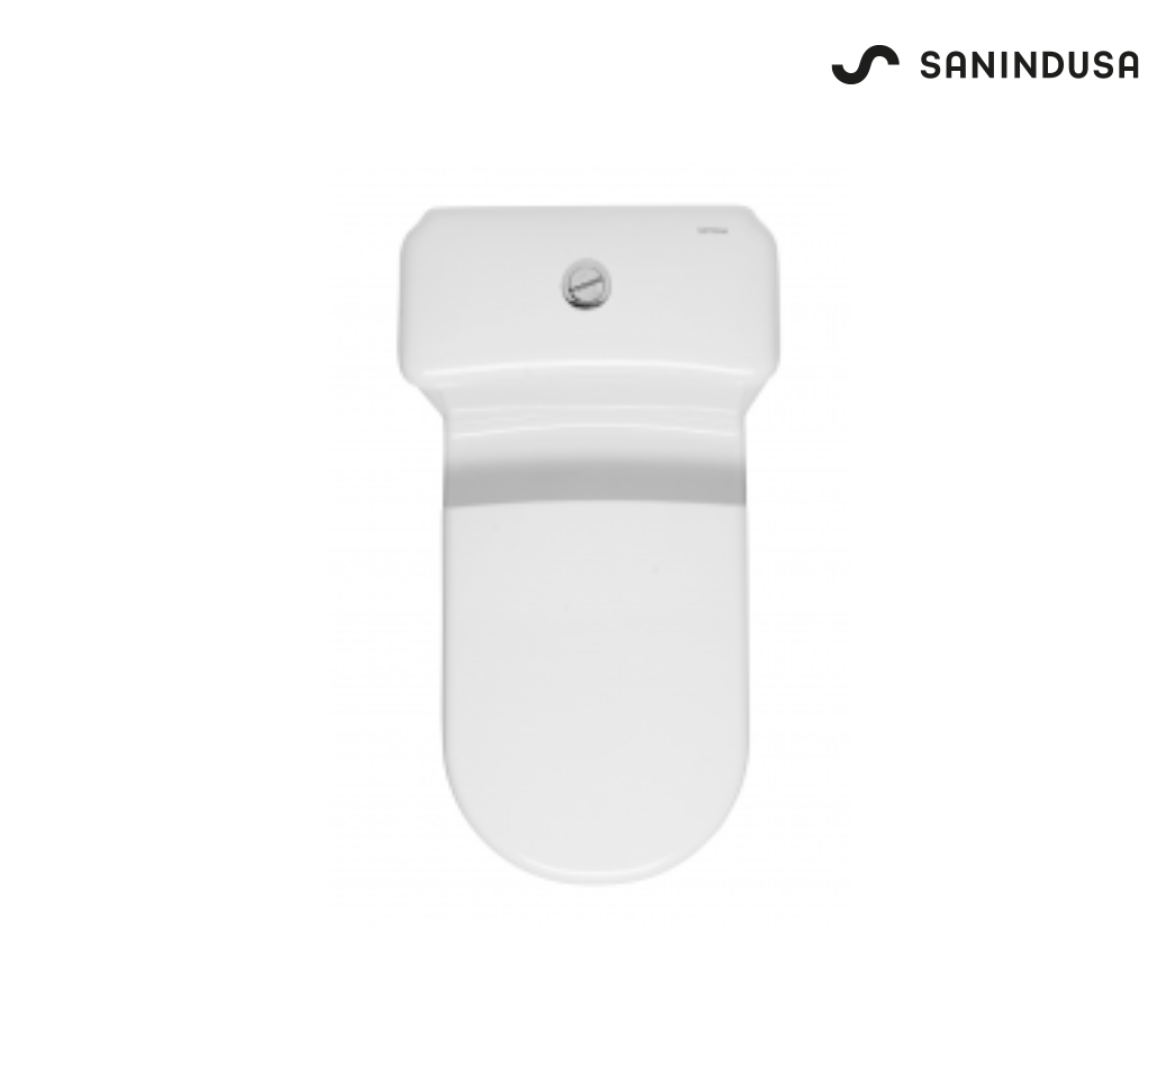 Inodoro completo Saninduisa mod. Proget Confort blanco